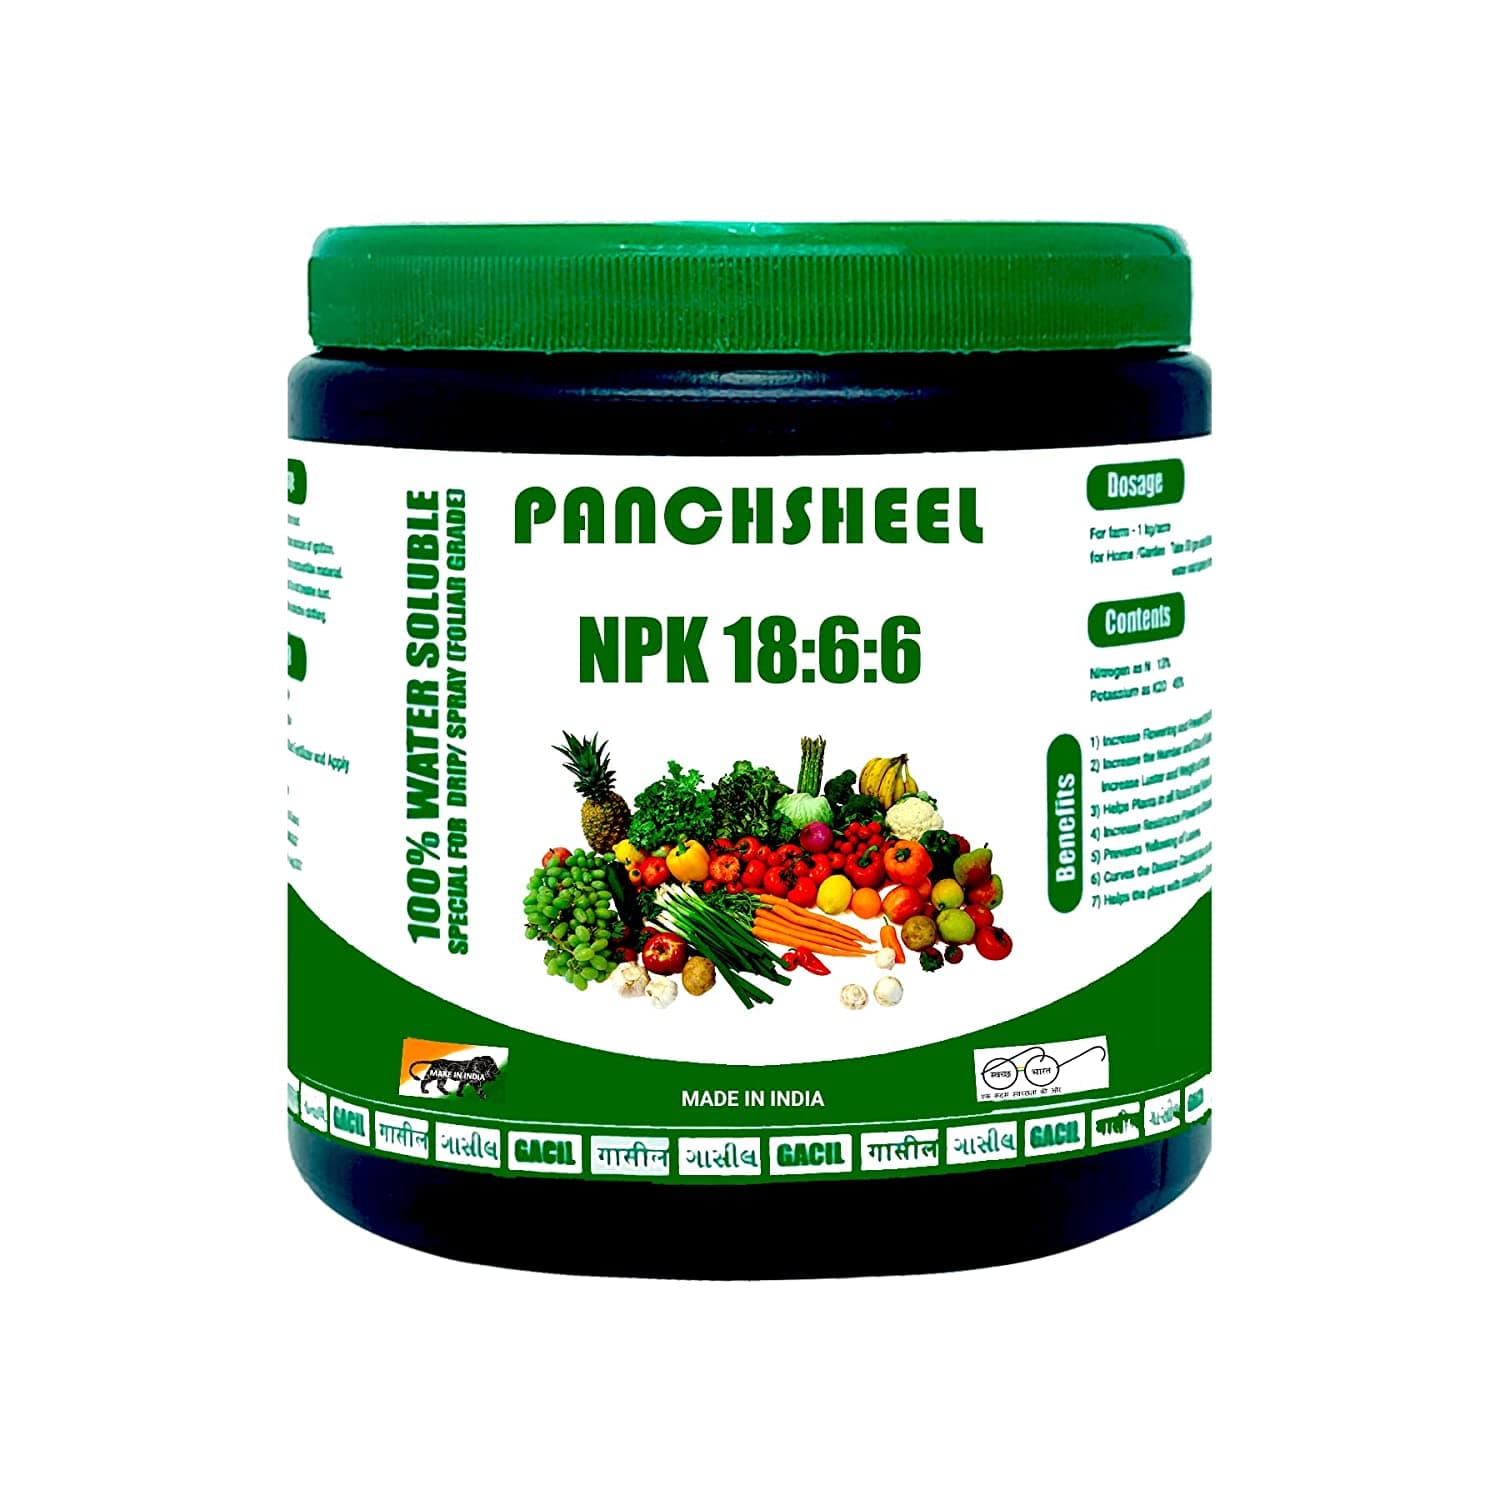 Panchsheel NPK Fertilizer -18:6:6 + 15% Sulphur (100% Water Soluble) 250 gms